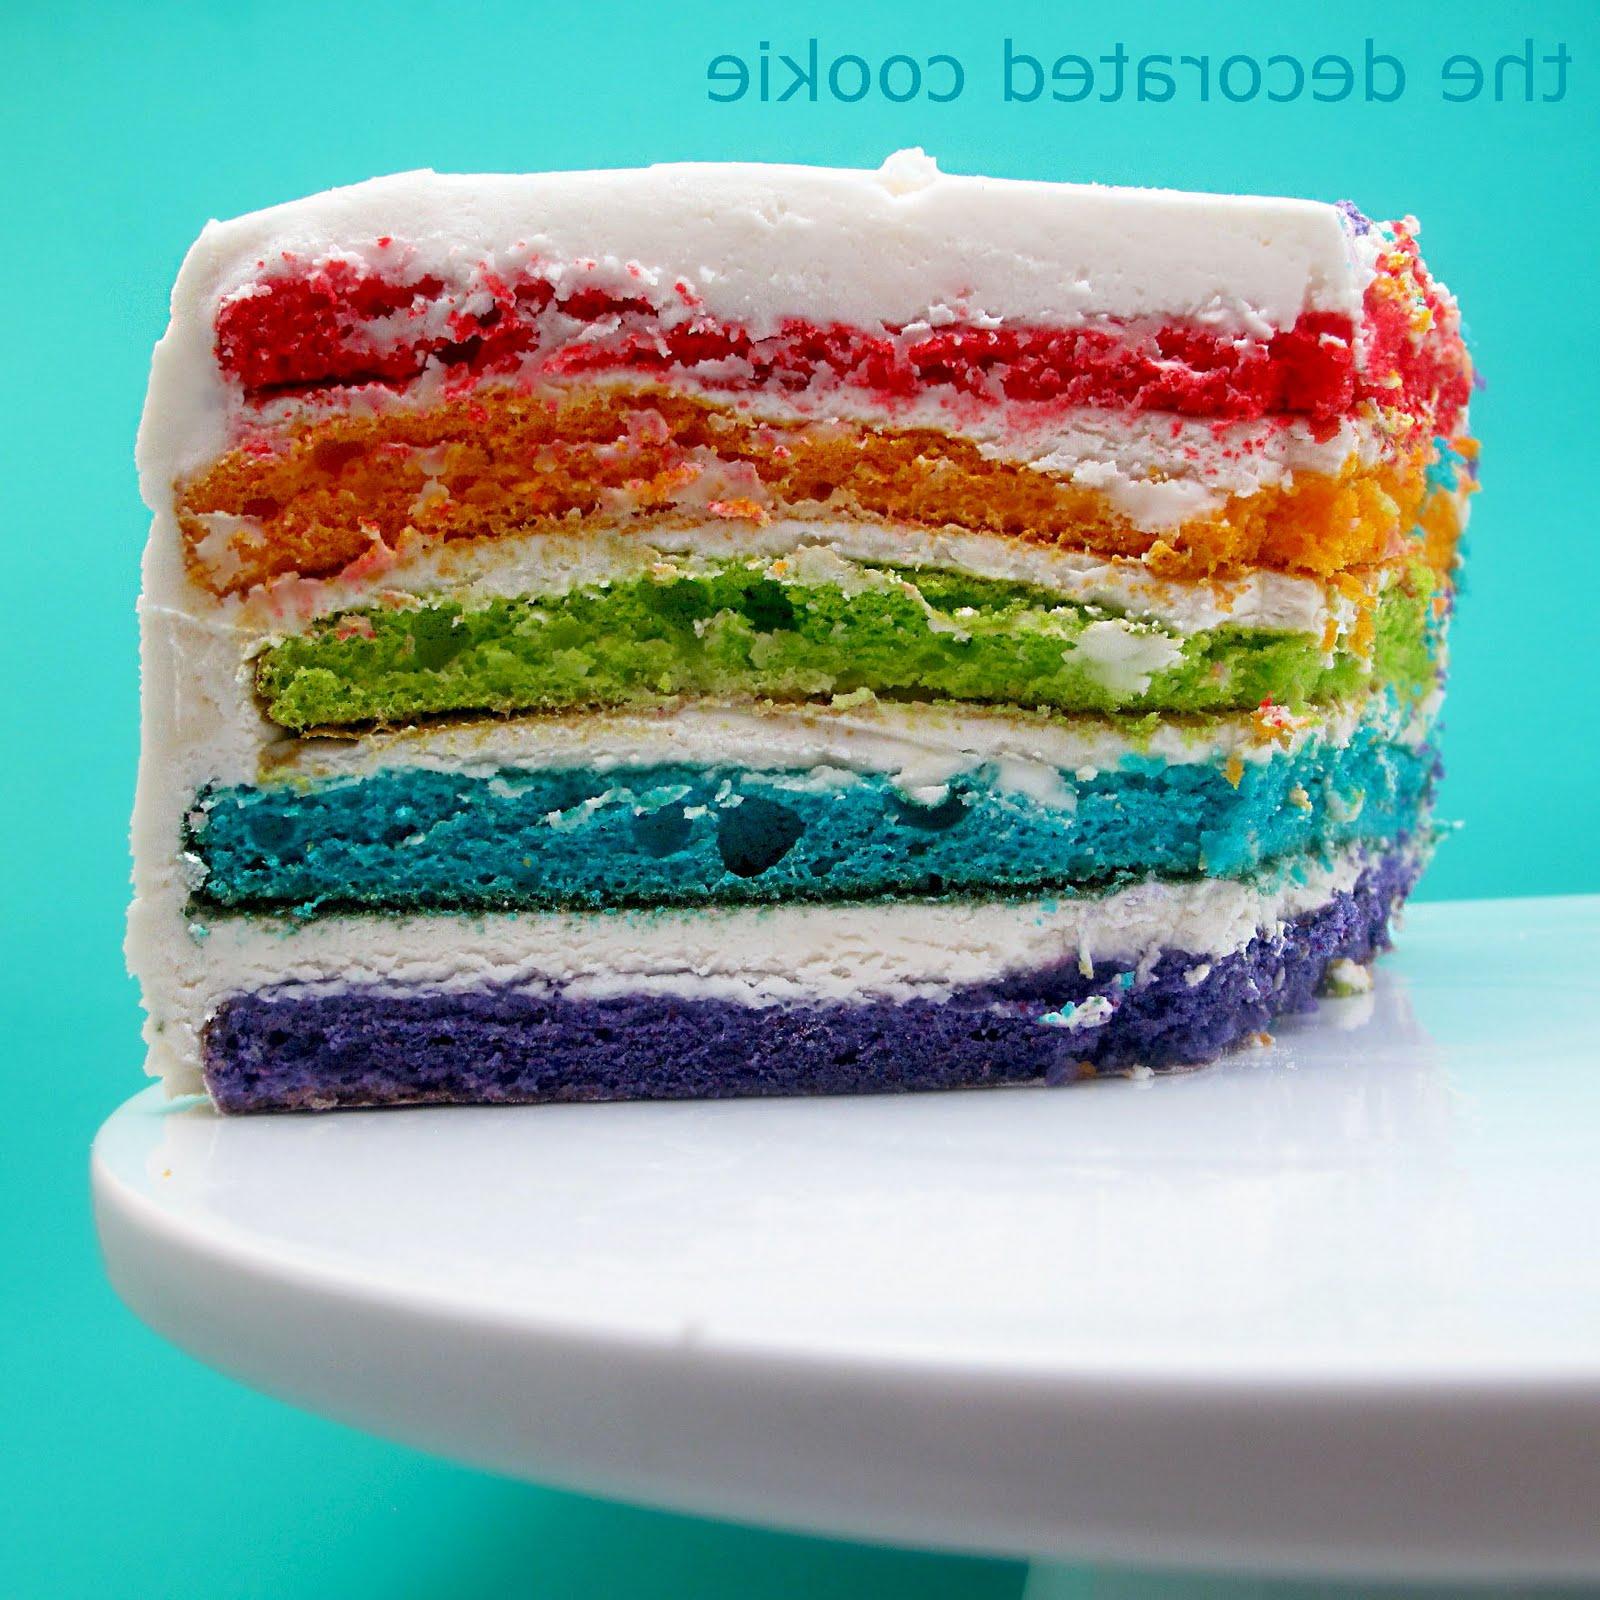 The original rainbow cake is